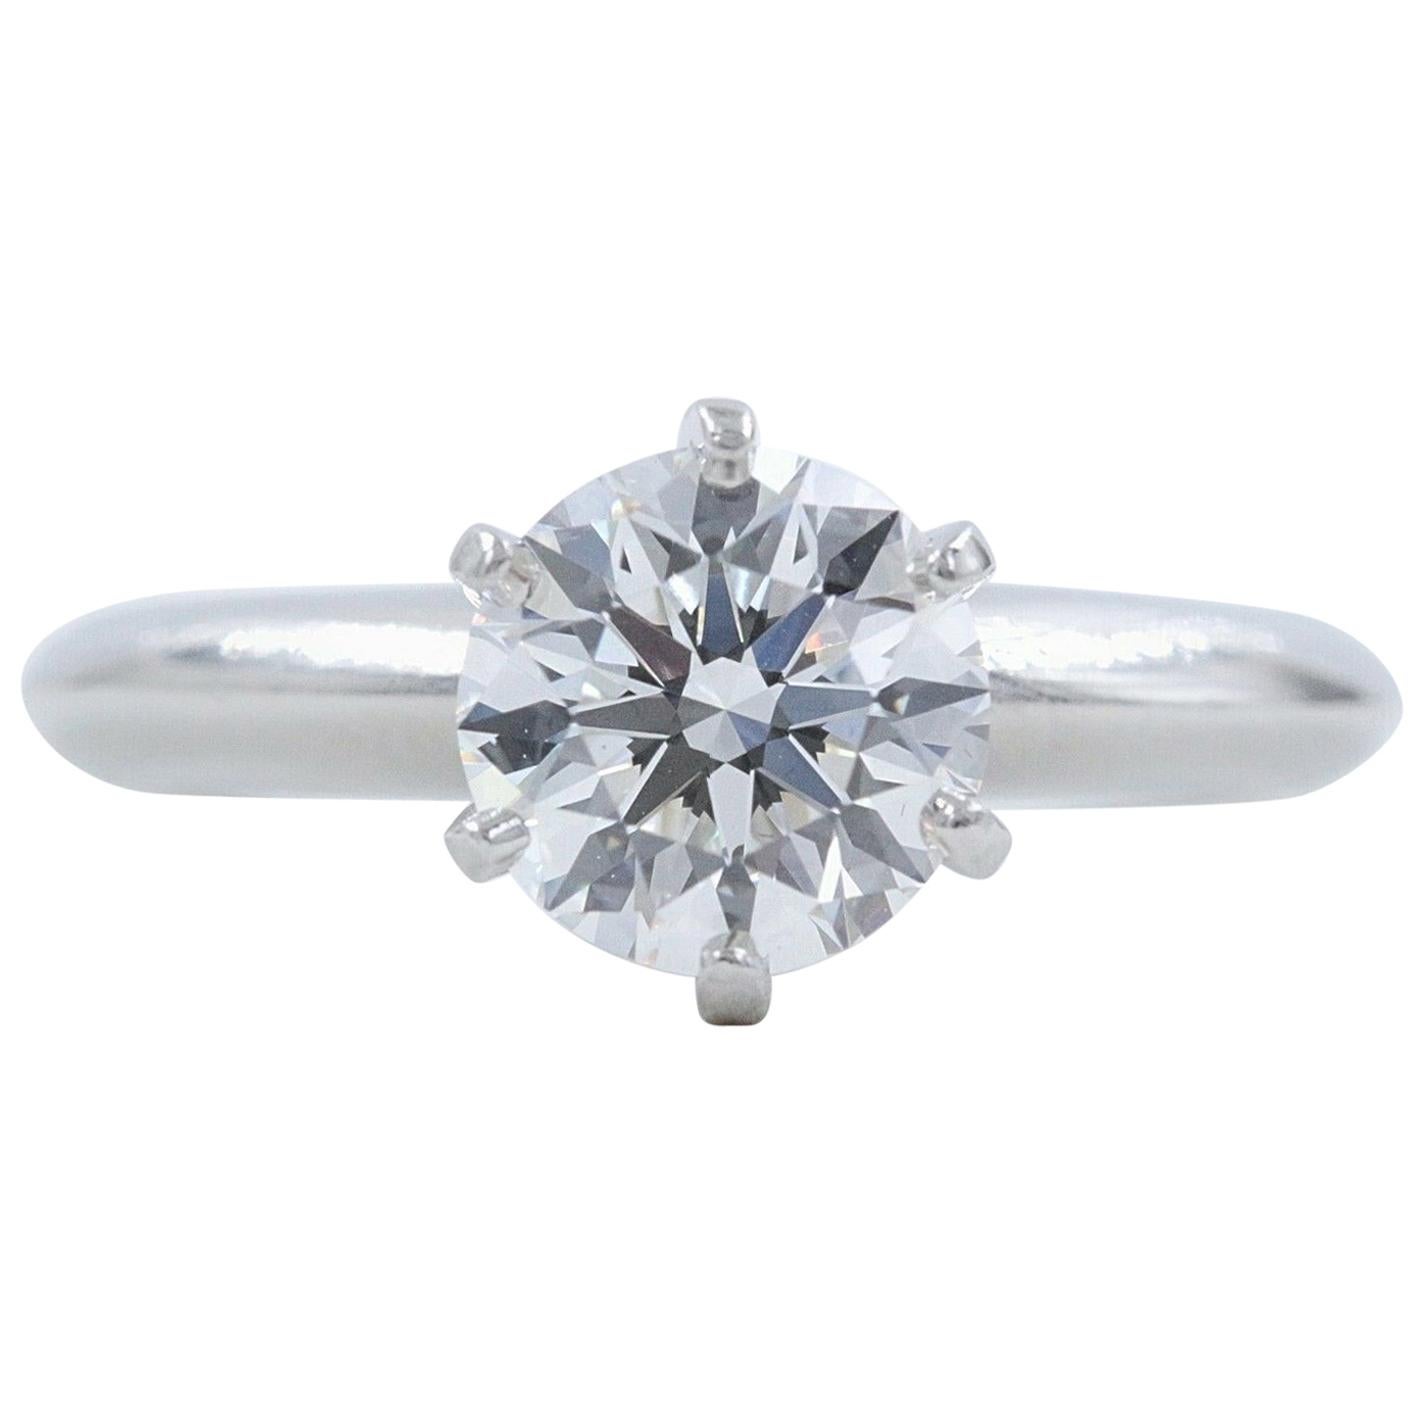 Tiffany & Co. Round Diamond Engagement Ring 1.23 Carat GVS2 Platinum